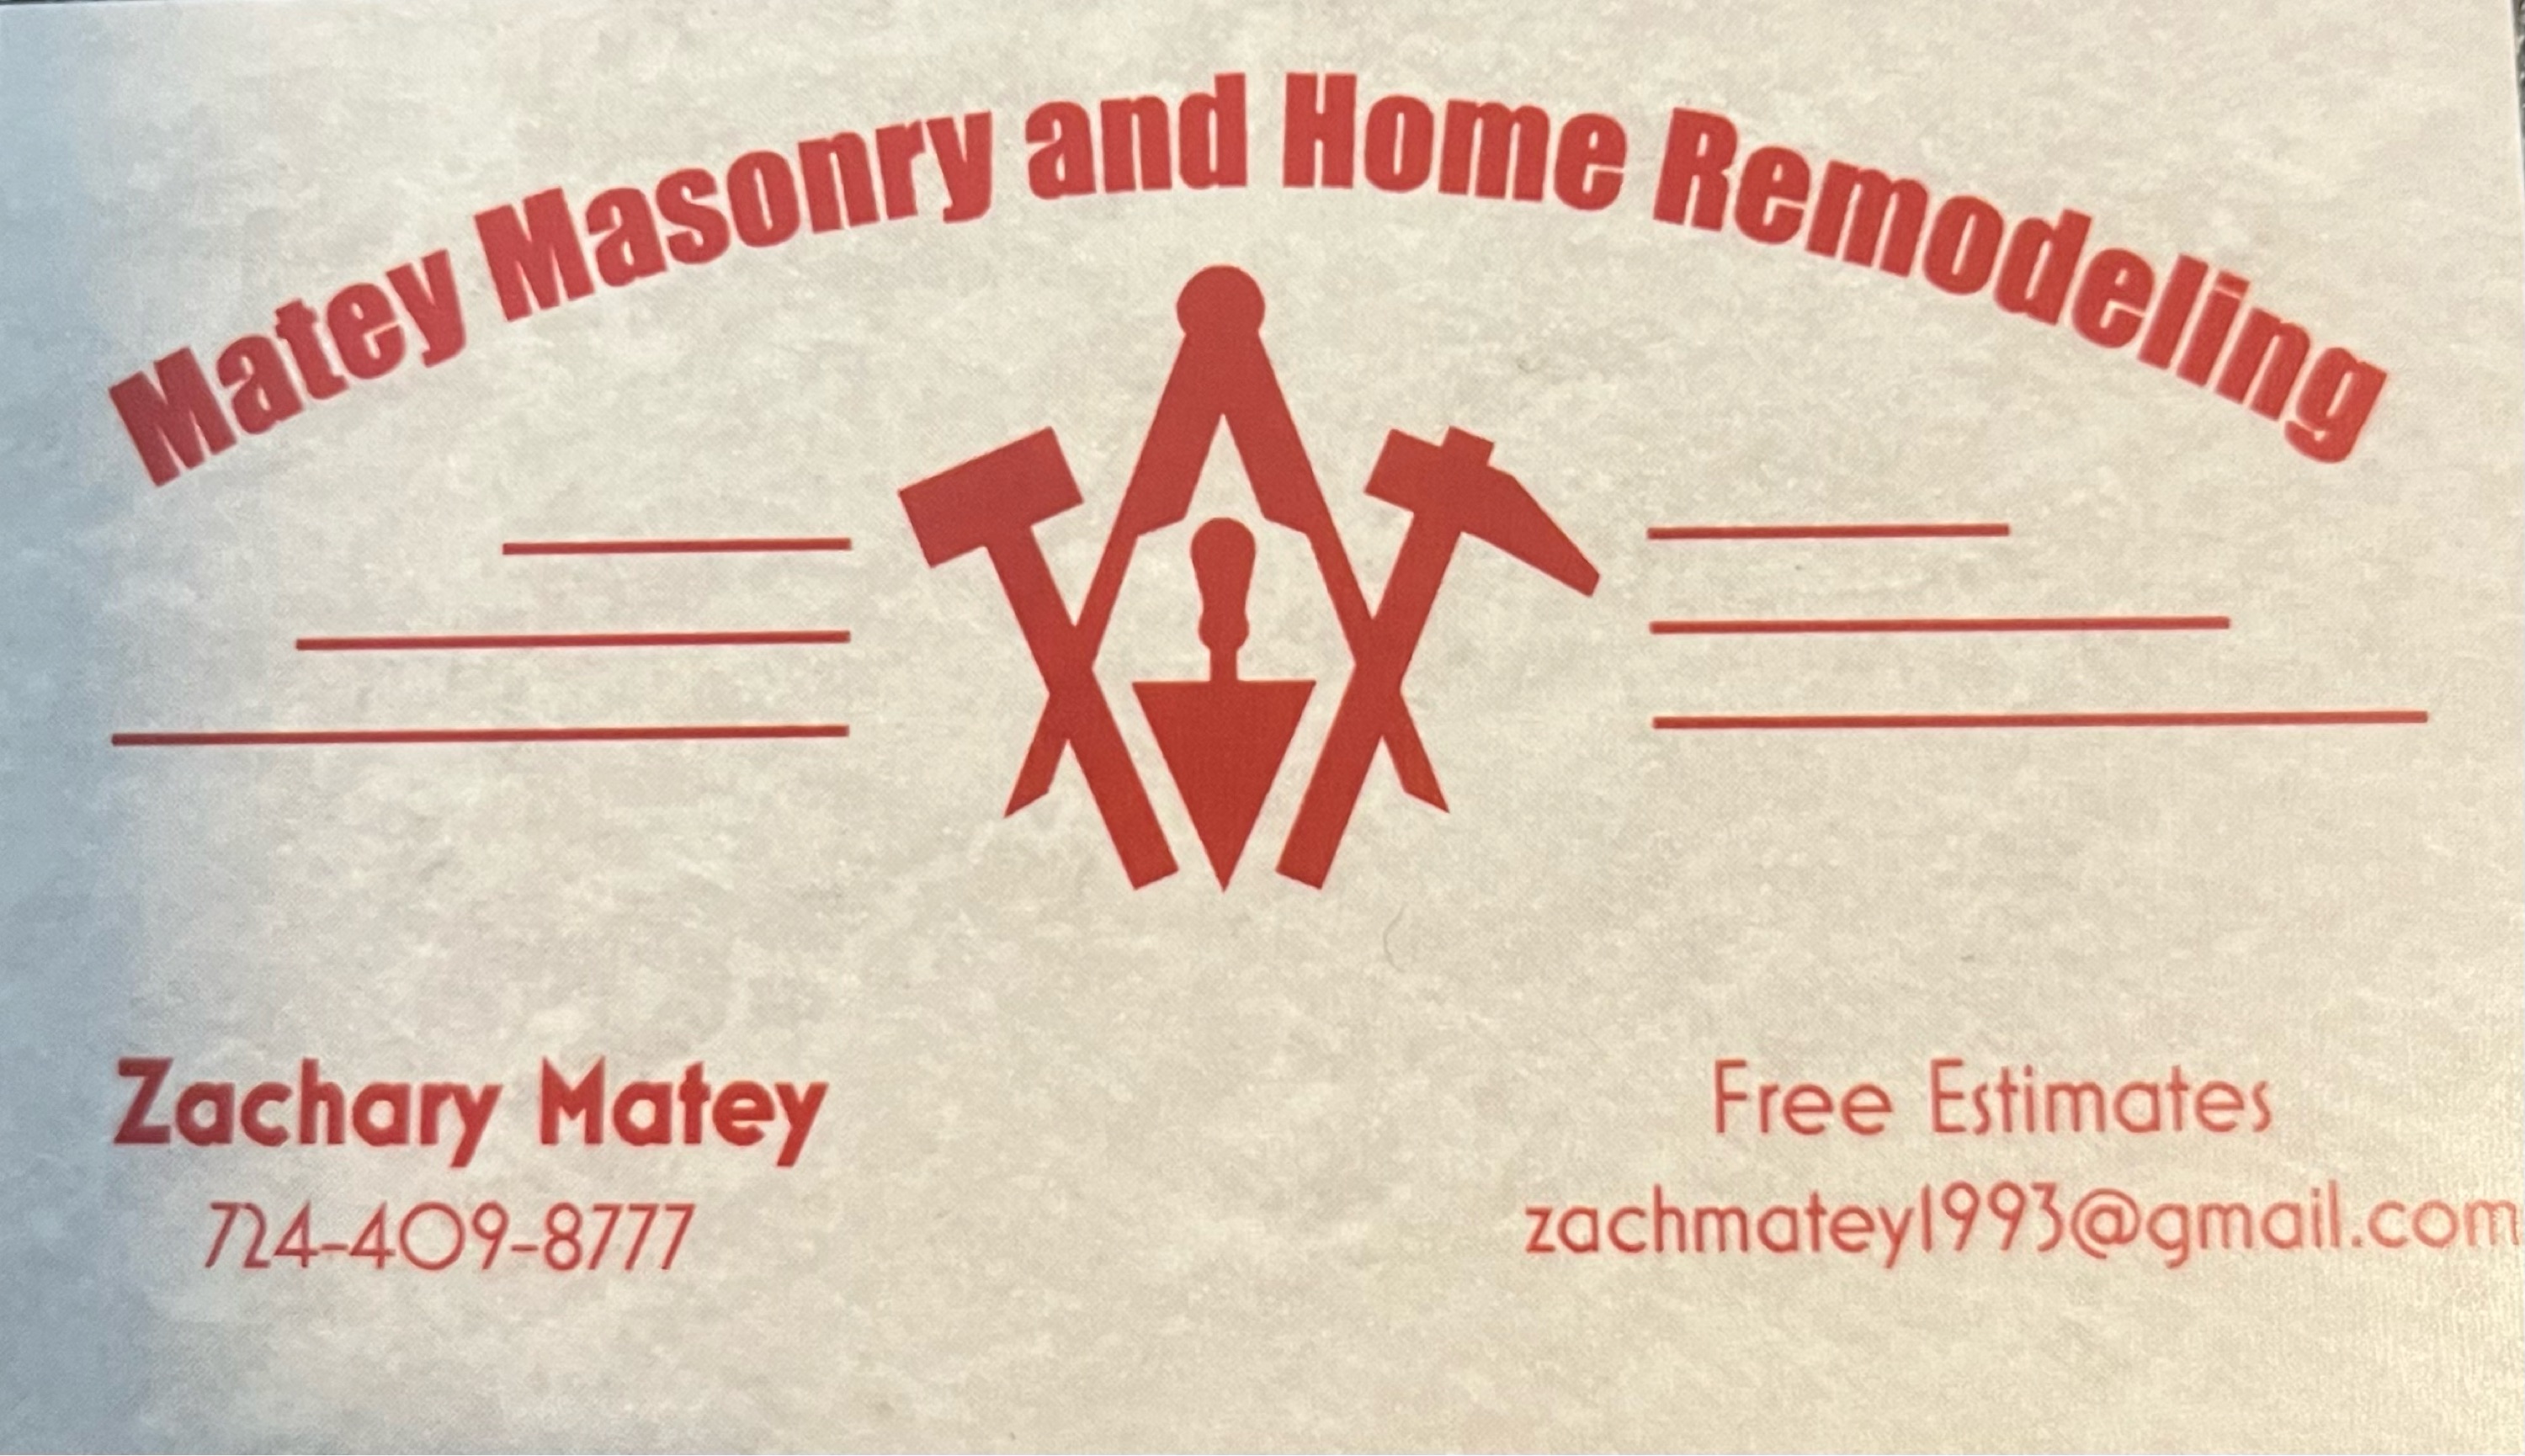 Matey Masonry And Home Remodeling Logo